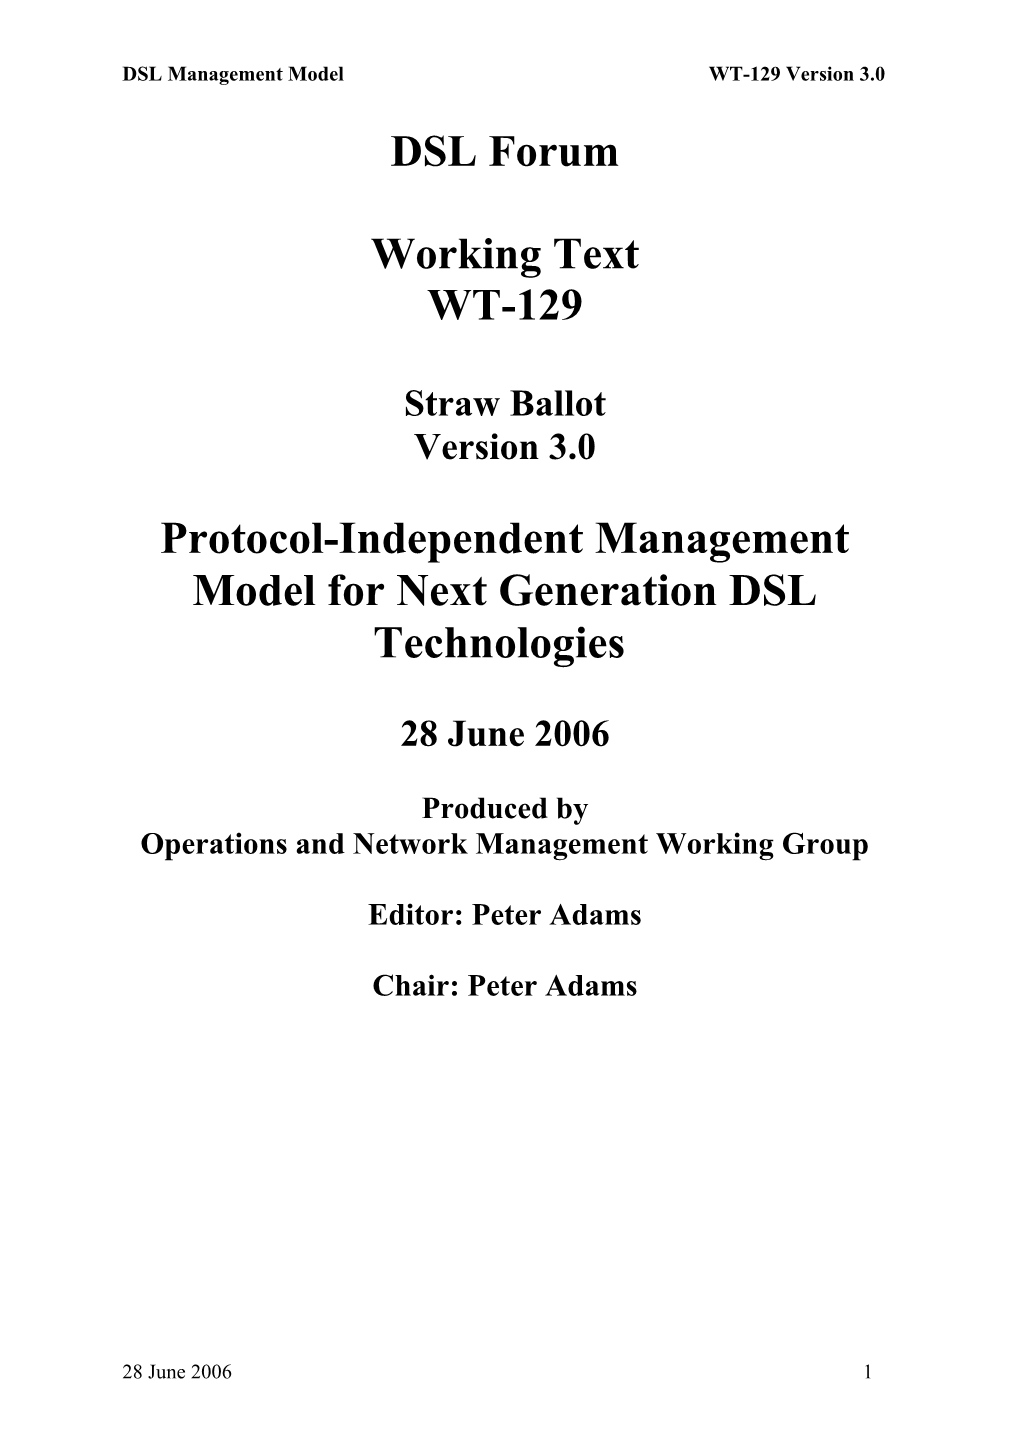 Operations and Network Management WG Lisbon Agenda